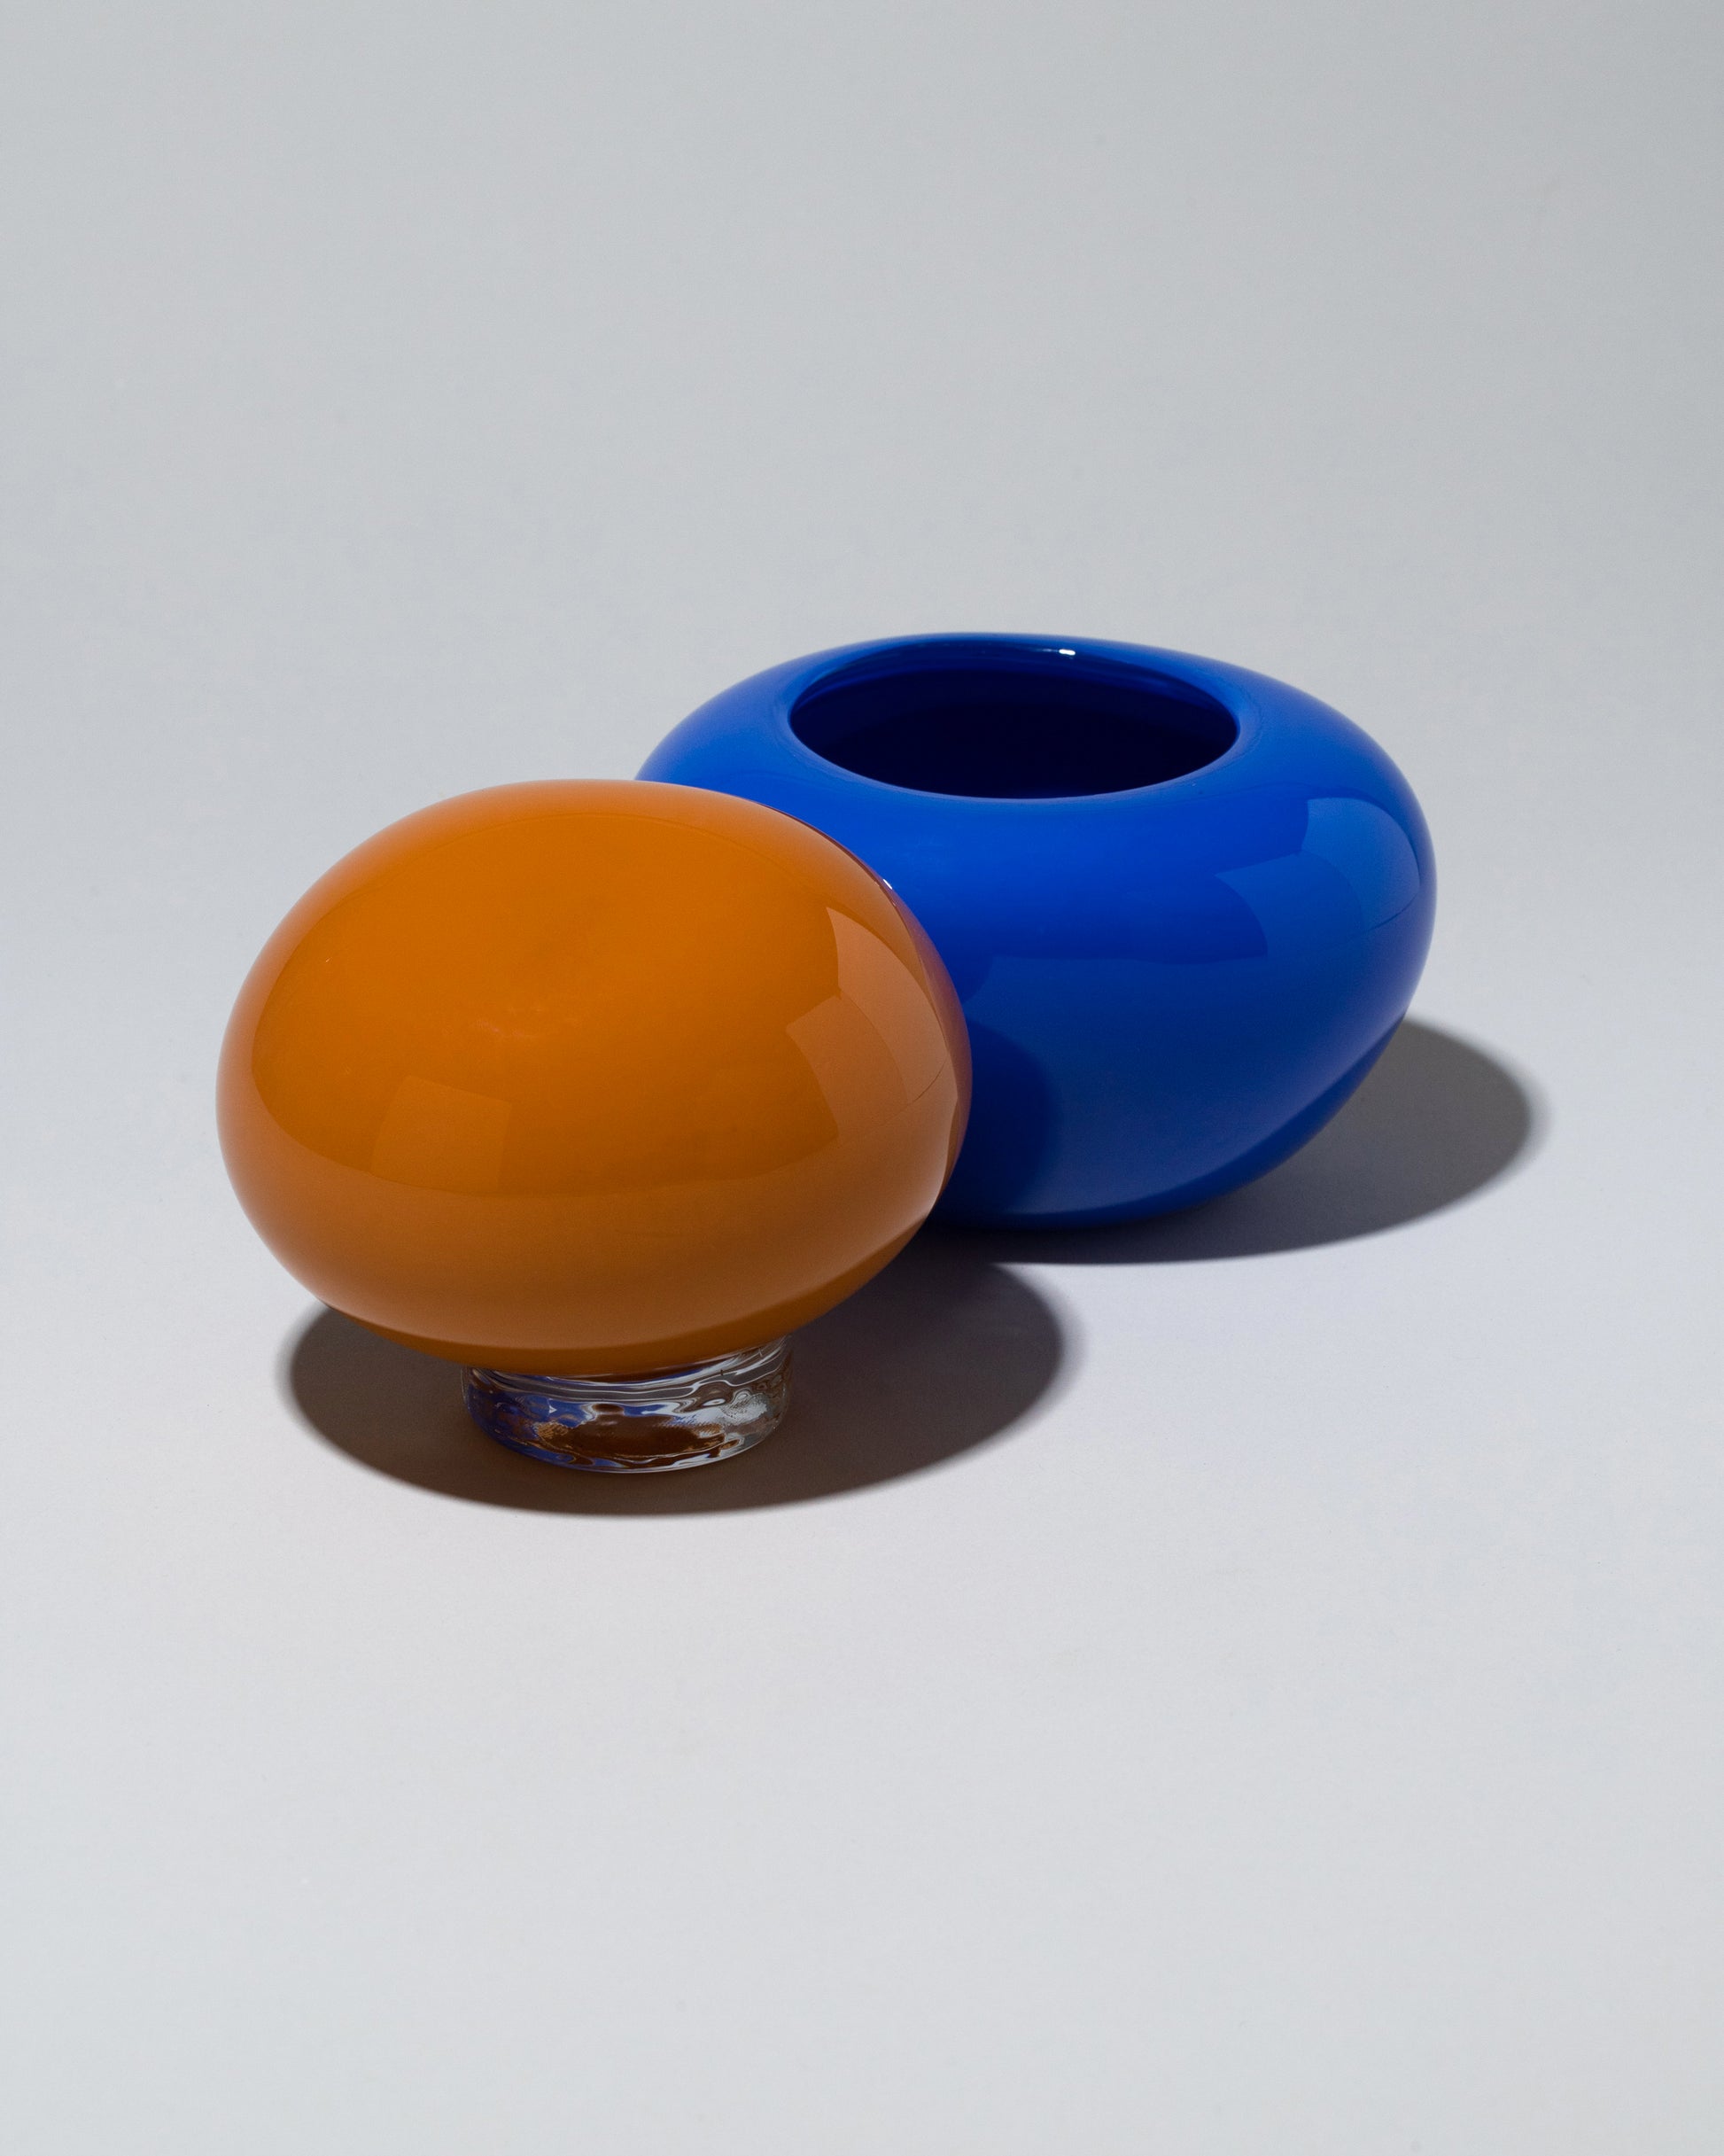 Detail view of the Helle Mardahl Orange & Blue Lollipop Bonbonniere on light color background.